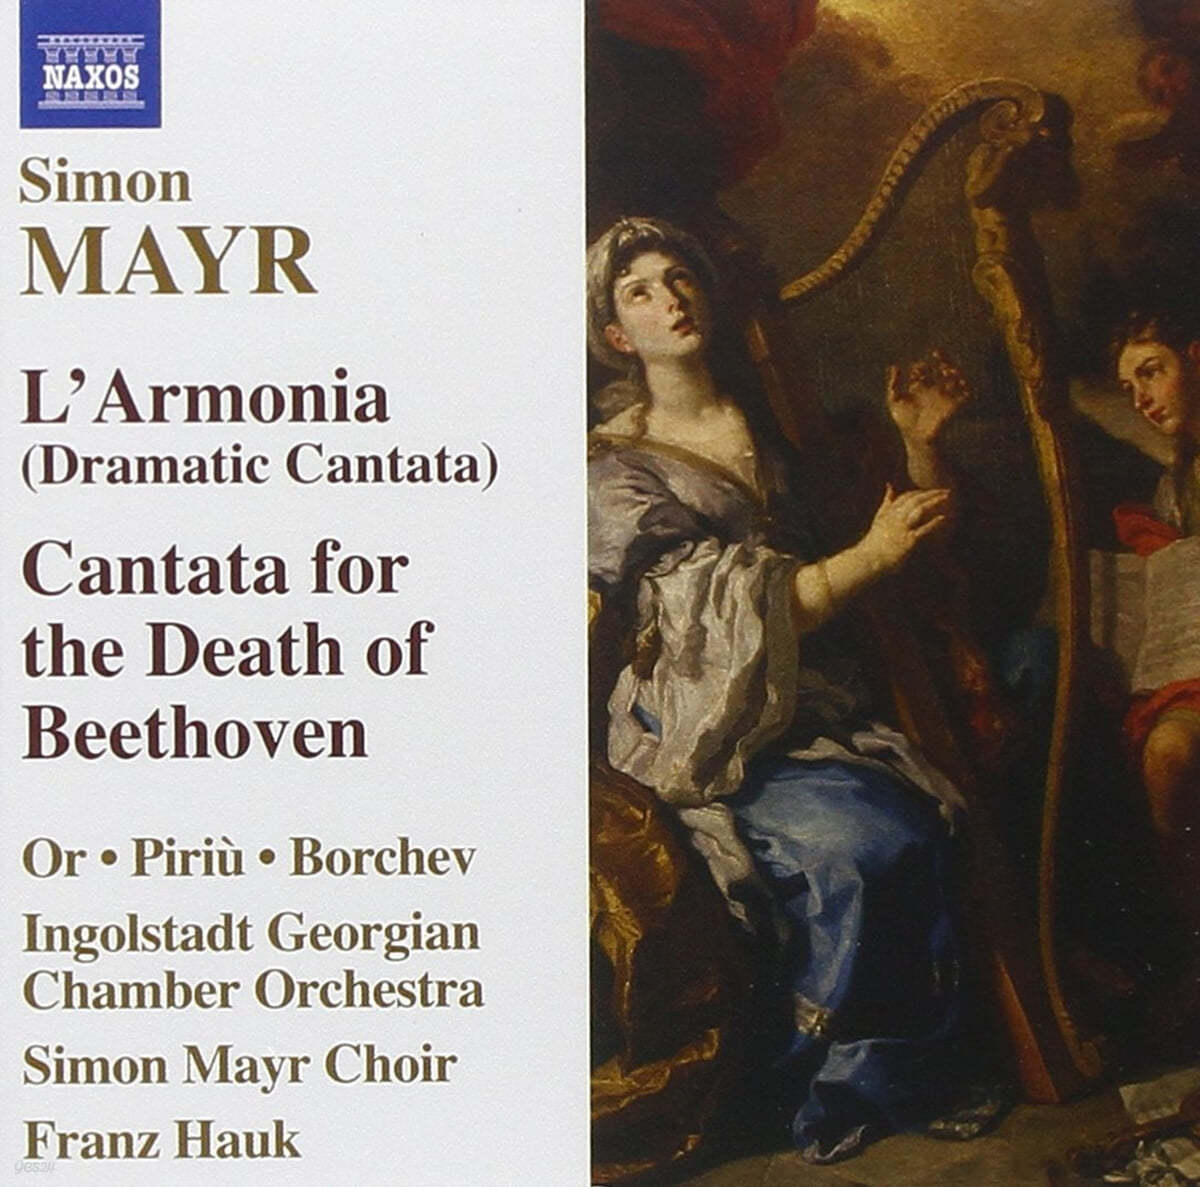 Franz Hauk 마이어: 극적 칸타타 "라르모니아", 베토벤의 죽음을 기리는 칸타타 (Mayr: L'Armonia, Canatata sopra la morte di Beethoven) 